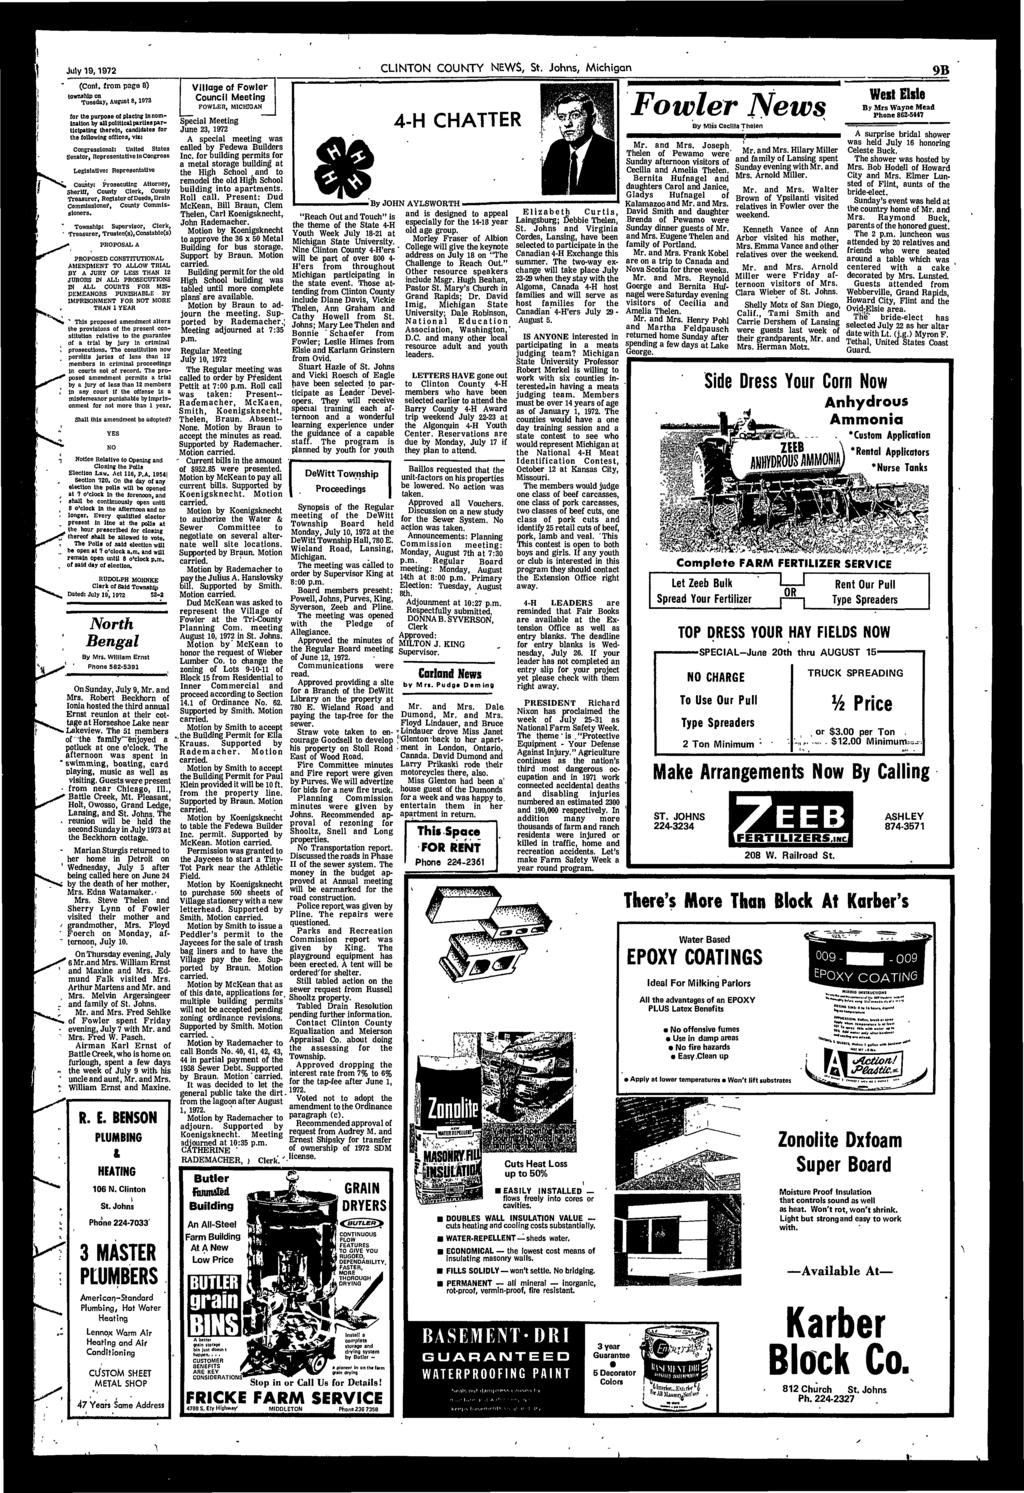 *X July 19,1972 CLINTON COUNTY NEWS, St. Johns, Mchgan 9B (Cont.